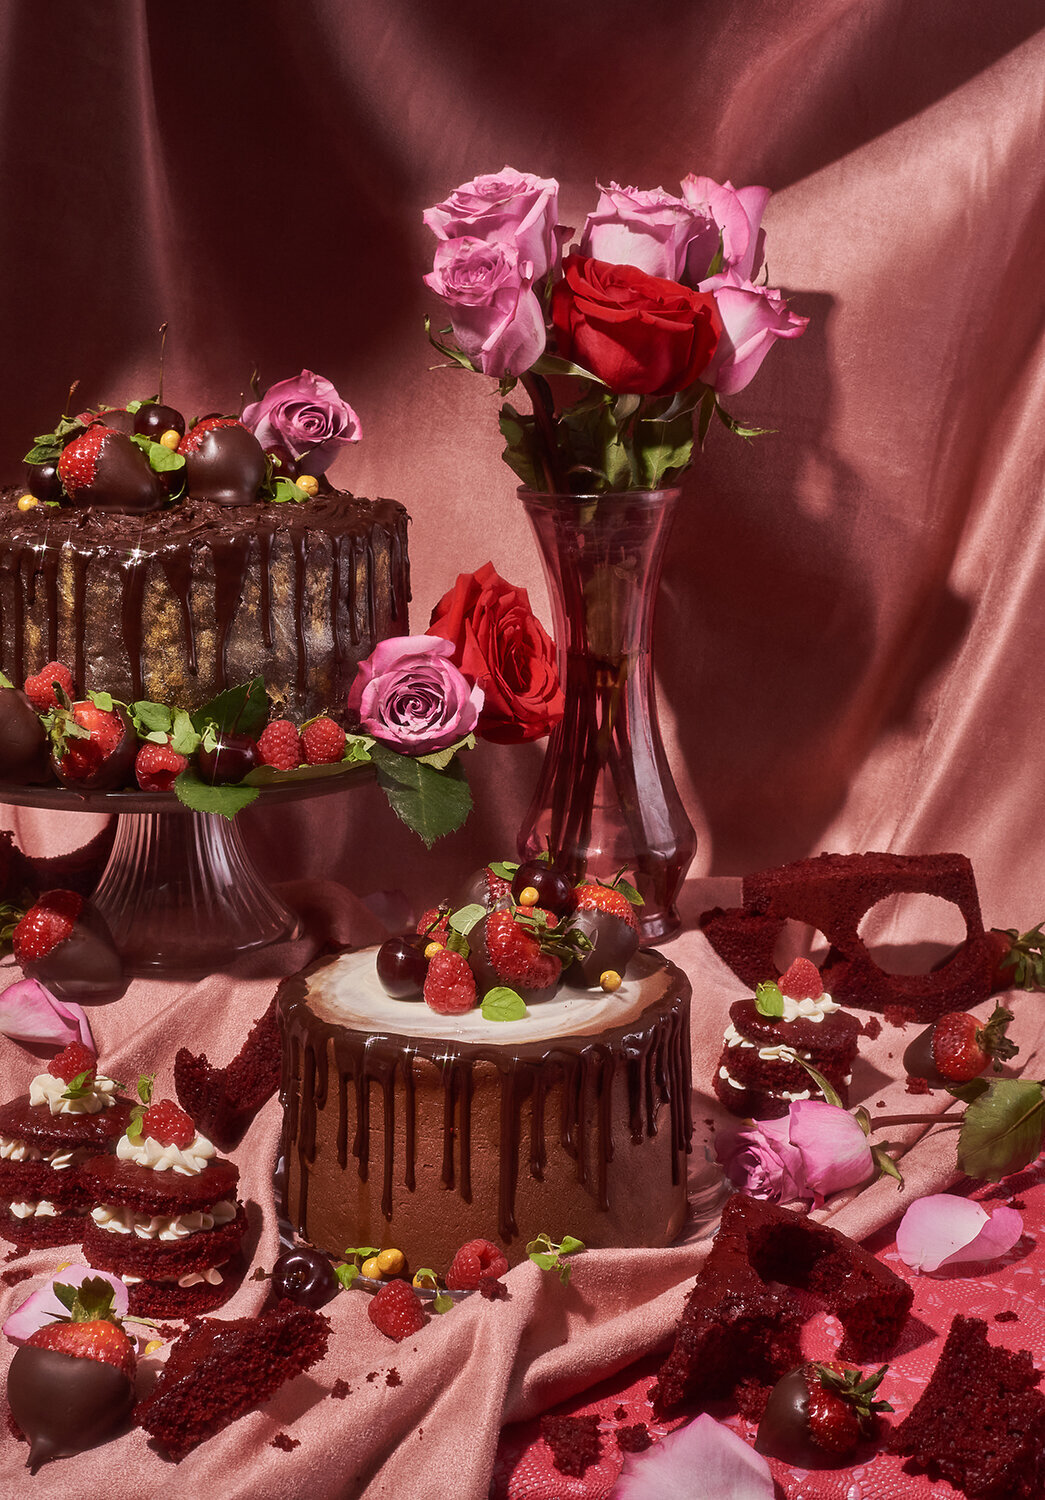 los-angeles-food-photographer-tabletop-scene-dessert-flowers-commercial-photographer-lindsay-kreighbaum-3